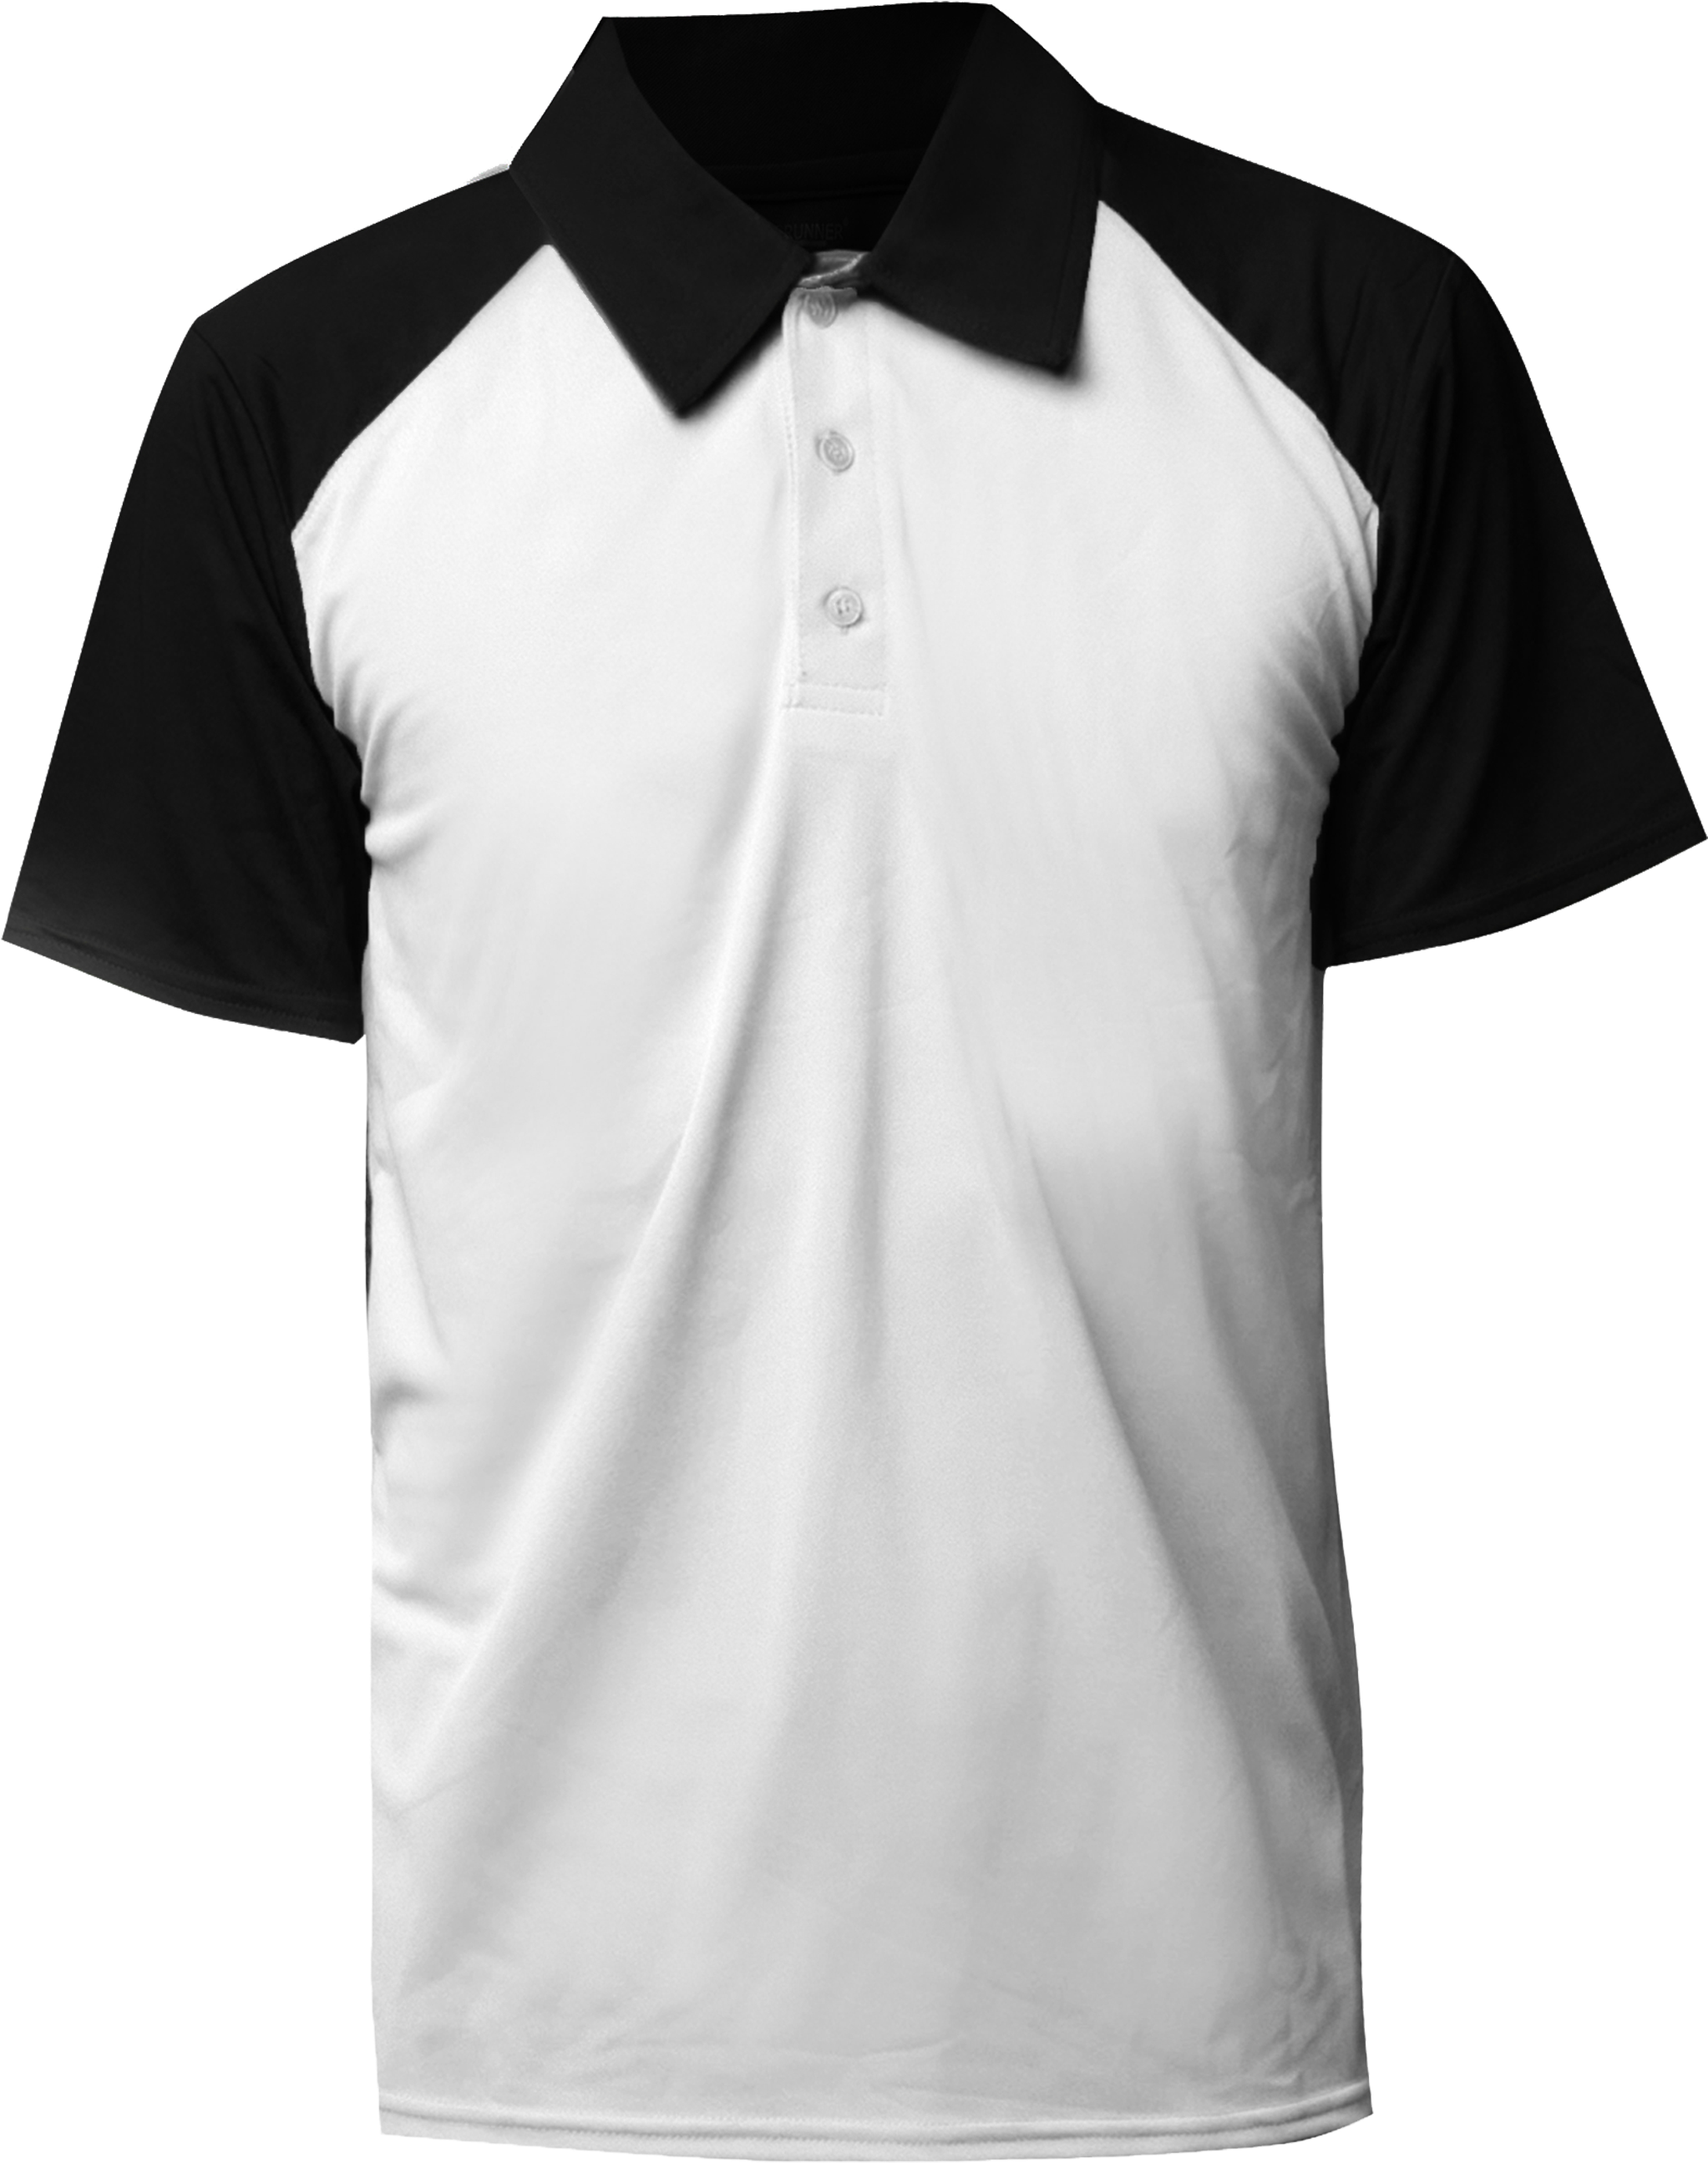 Black White Polo Shirt Design